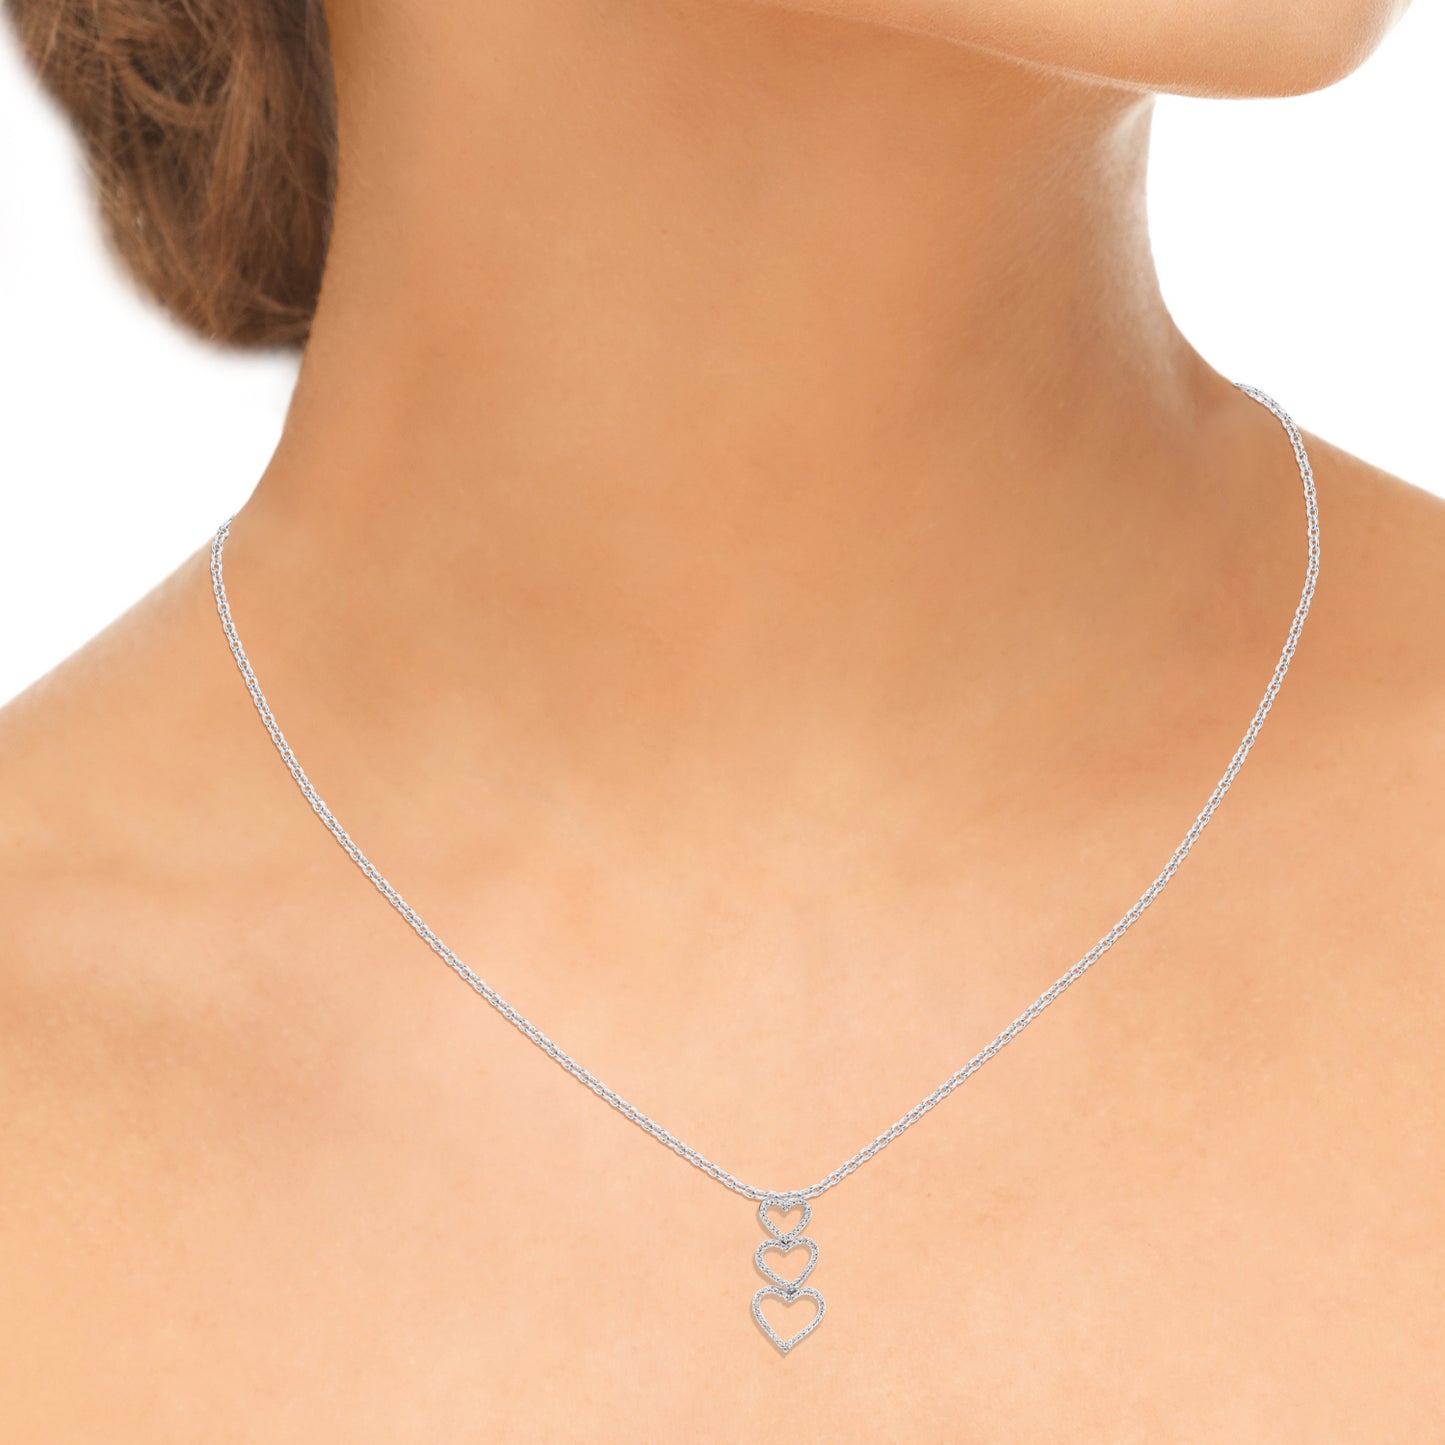 Triple Heart Pendant Necklace in 925 Sterling Silver